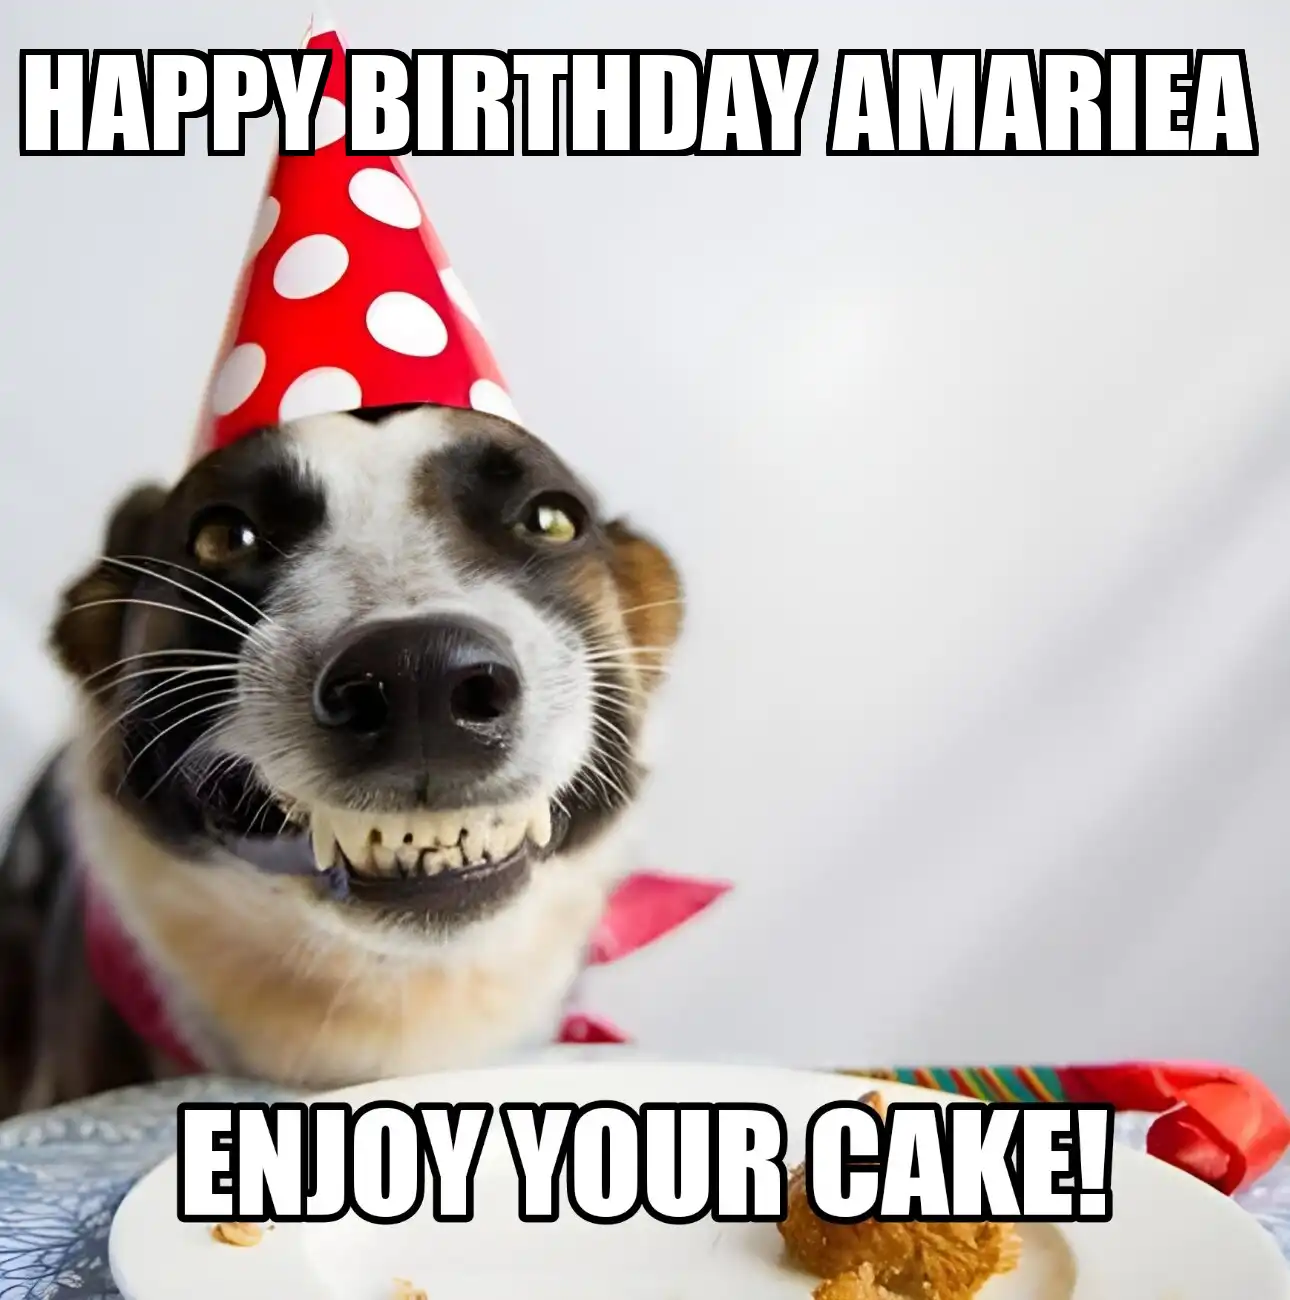 Happy Birthday Amariea Enjoy Your Cake Dog Meme